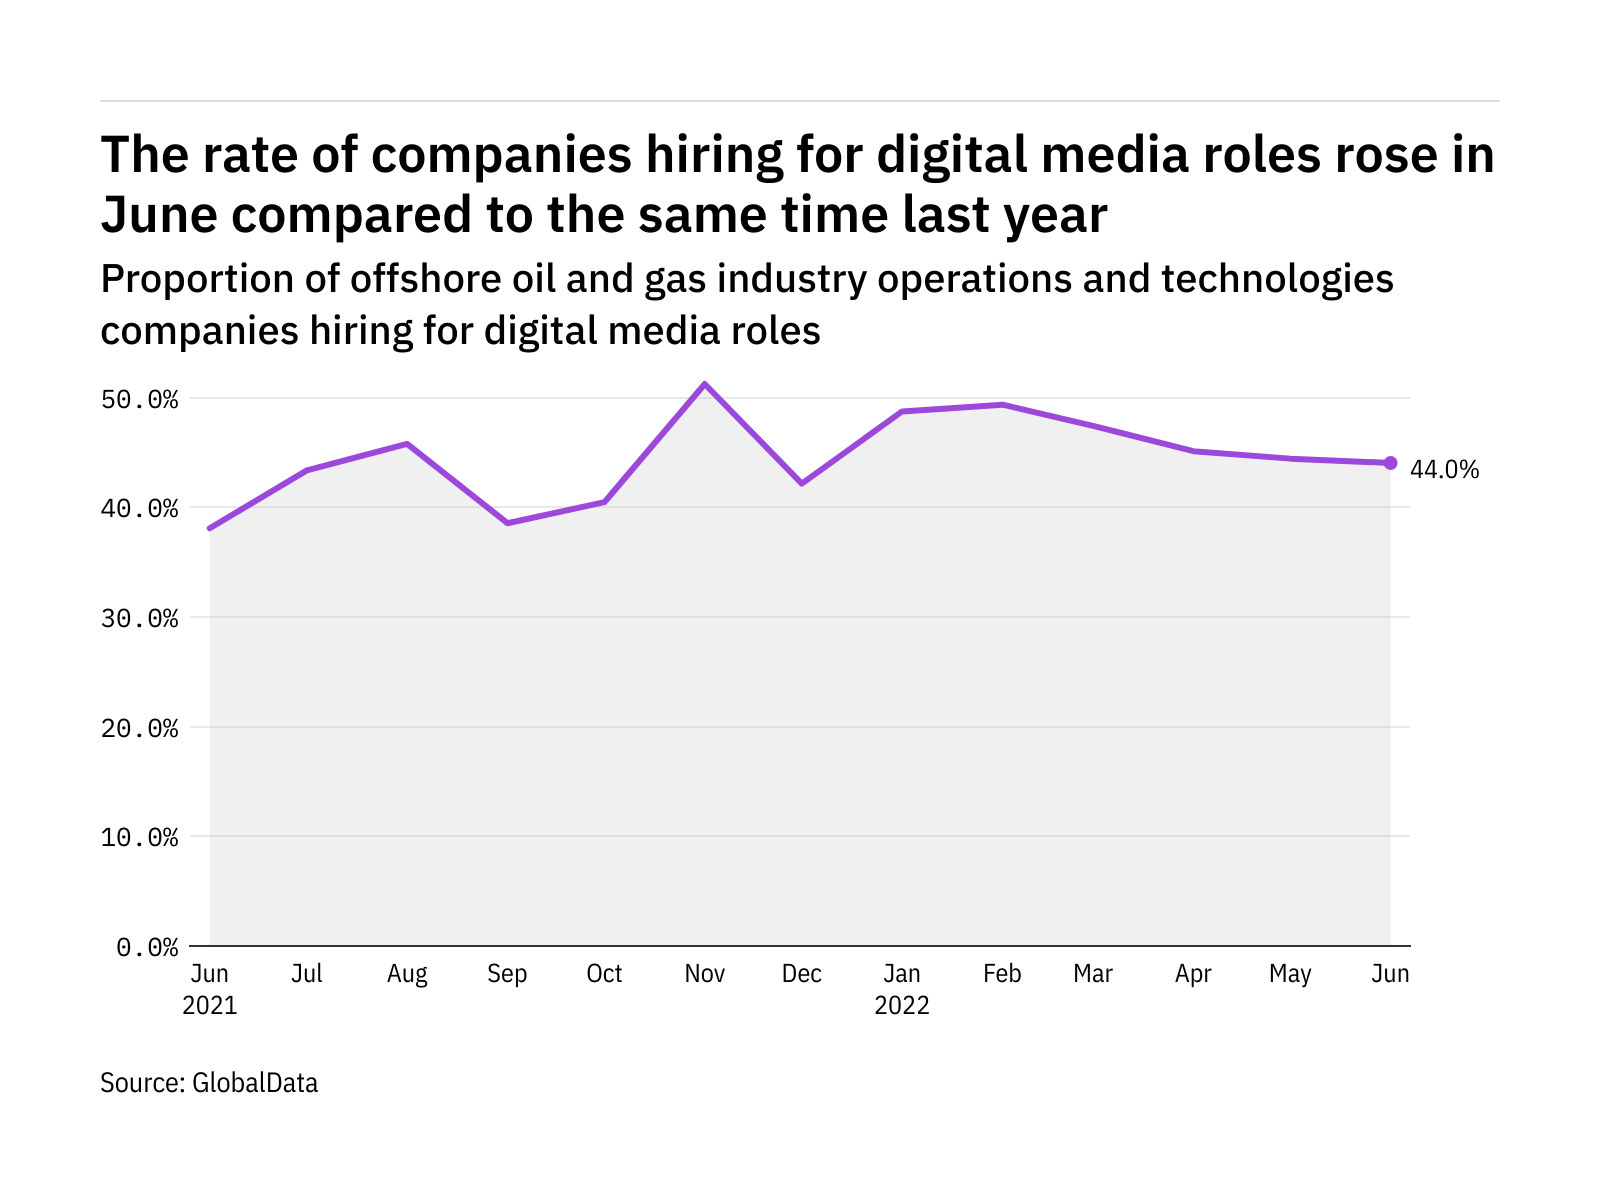 Digital media hiring levels in the offshore industry rose in June 2022